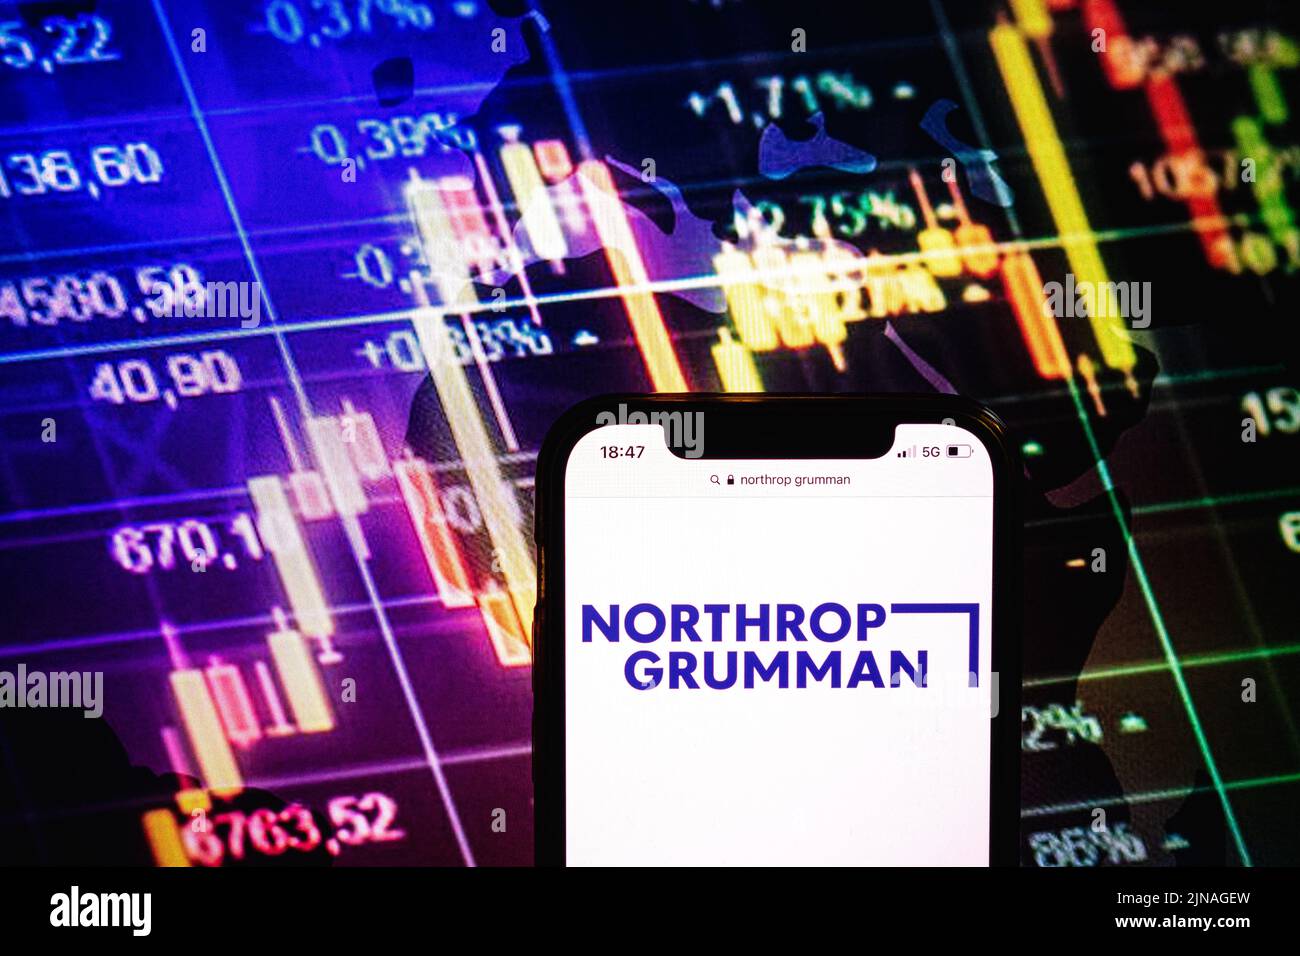 KONSKIE, POLAND - August 09, 2022: Smartphone displaying logo of Northrop Grumman company on stock exchange diagram background Stock Photo